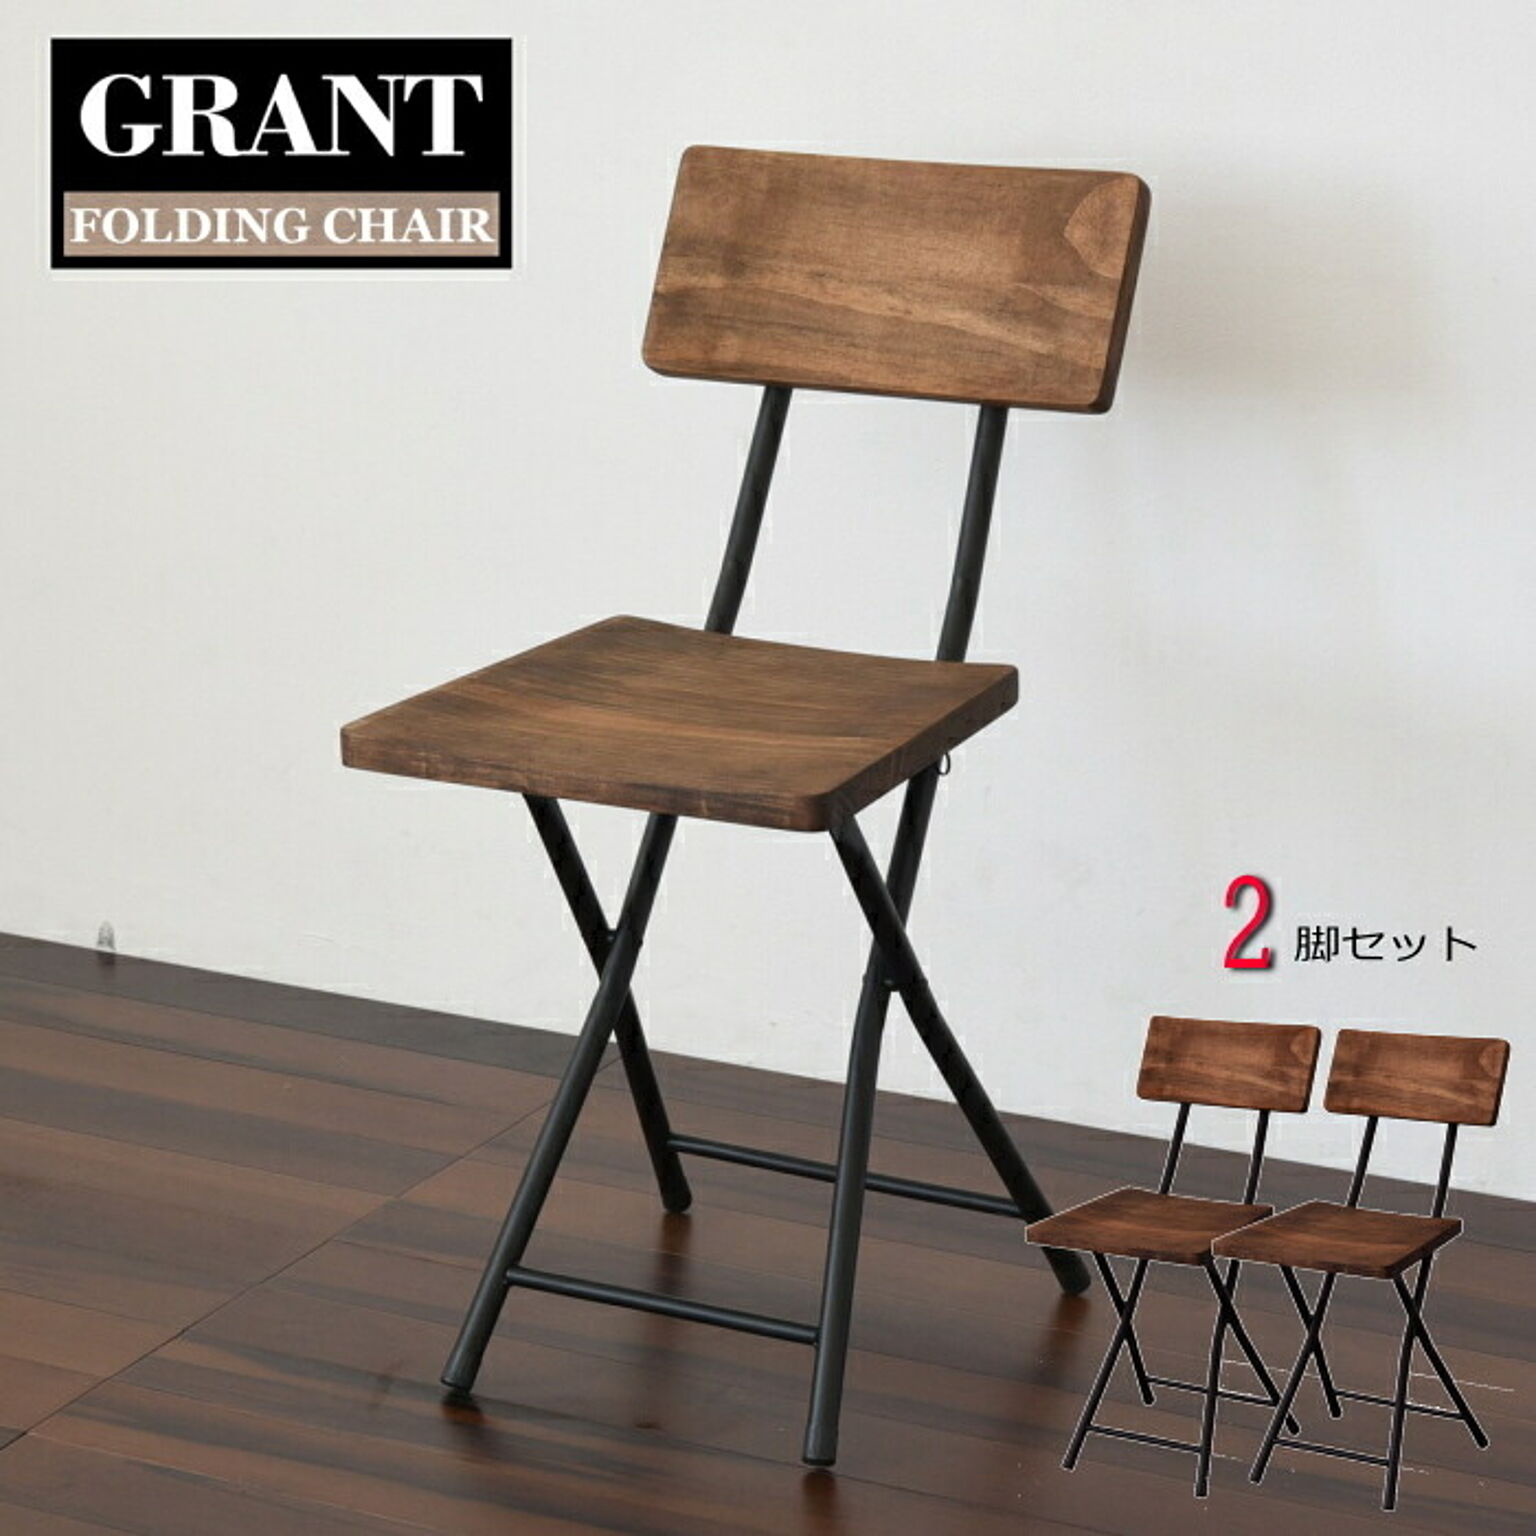 GRANT(グラント) 折りたたみチェアー 【2脚セット】 折りたたみ椅子 折りたたみチェア 軽量 木製 椅子 いす イス 持ち運び アイアン アンティーク アウトドア フォールディングチェア 背もた